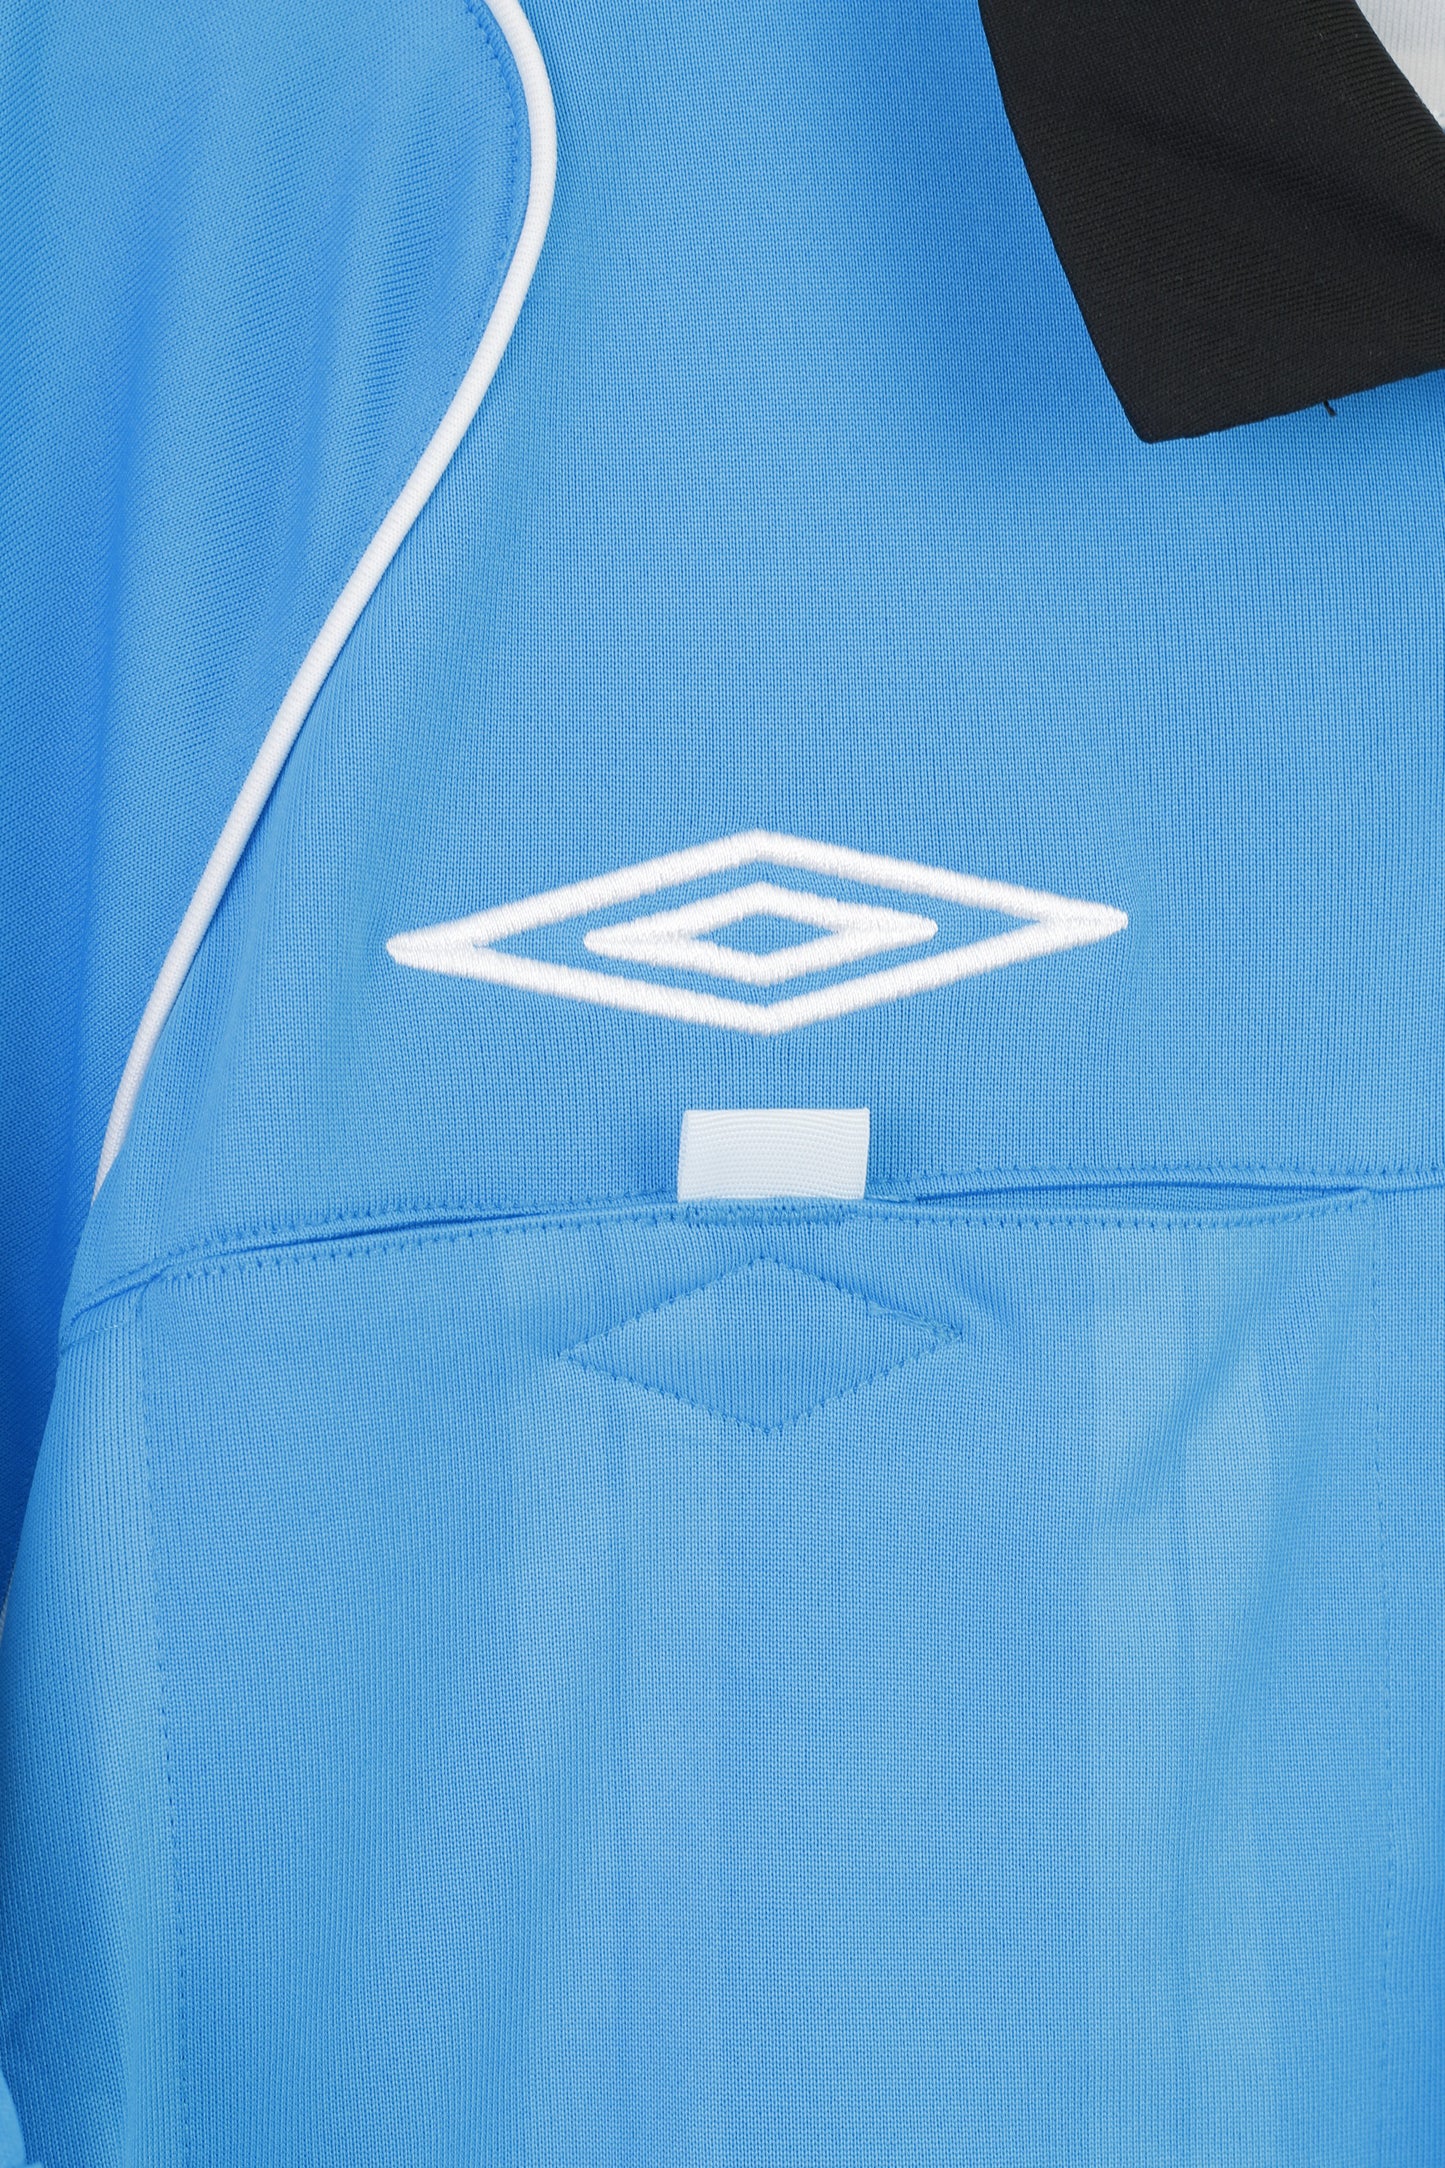 Umbro The Football League Men XL Polo Shirt Blue Premier League Jersey snap Bottoms Sport Vintage Training Sportswear Top